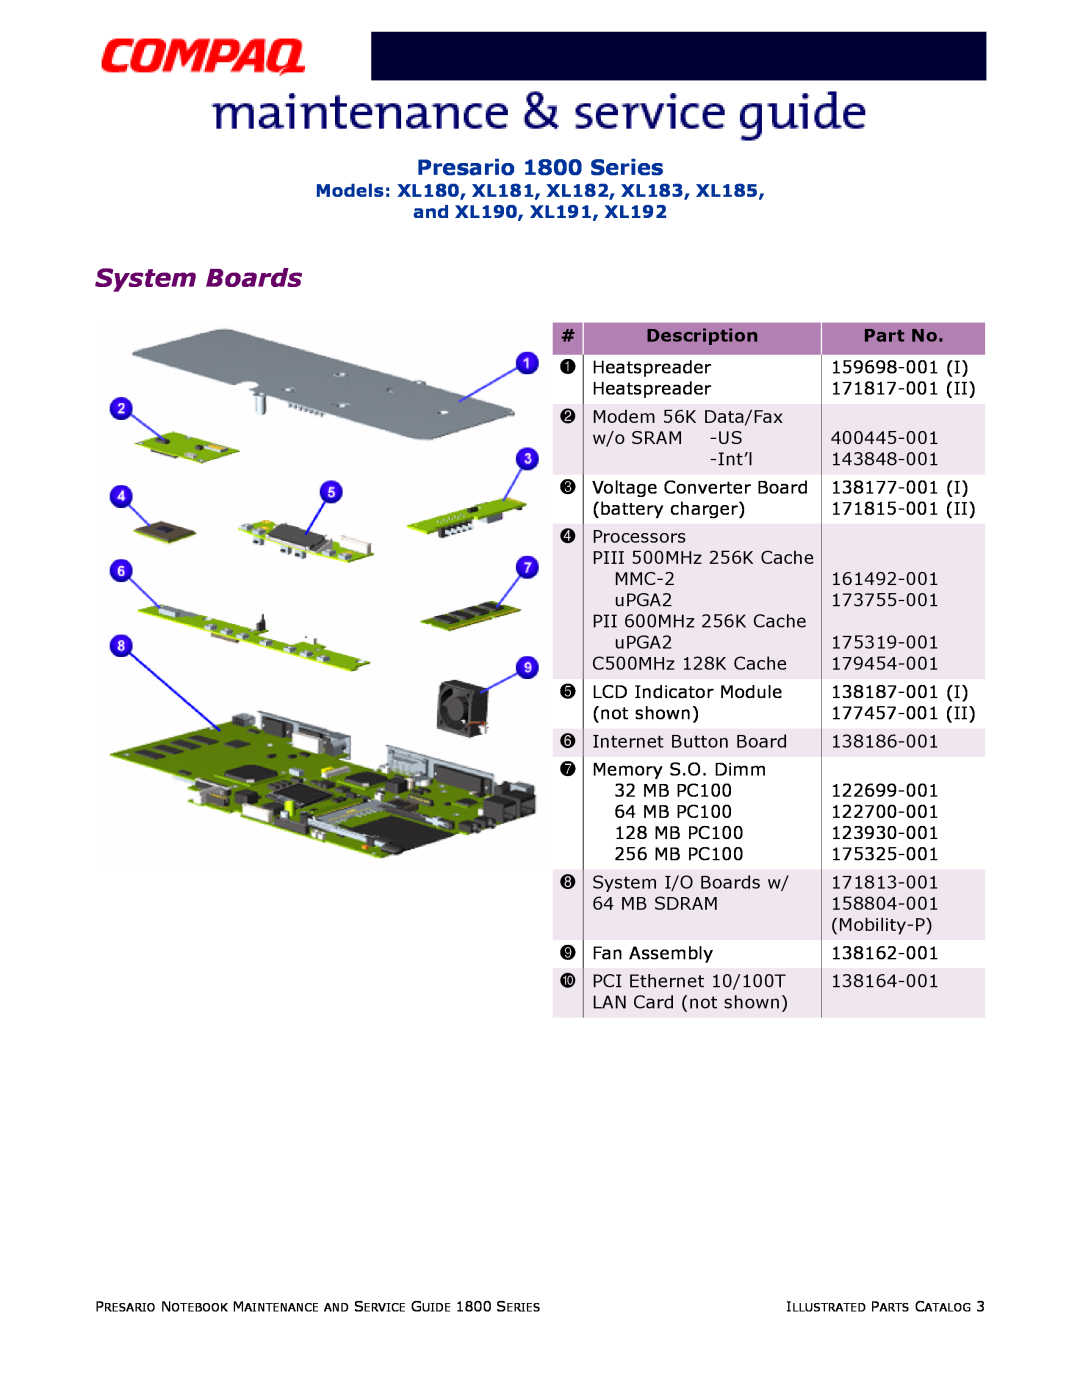 Compaq System Boards, Presario 1800 Series, Models XL180, XL181, XL182, XL183, XL185 and XL190, XL191, XL192 